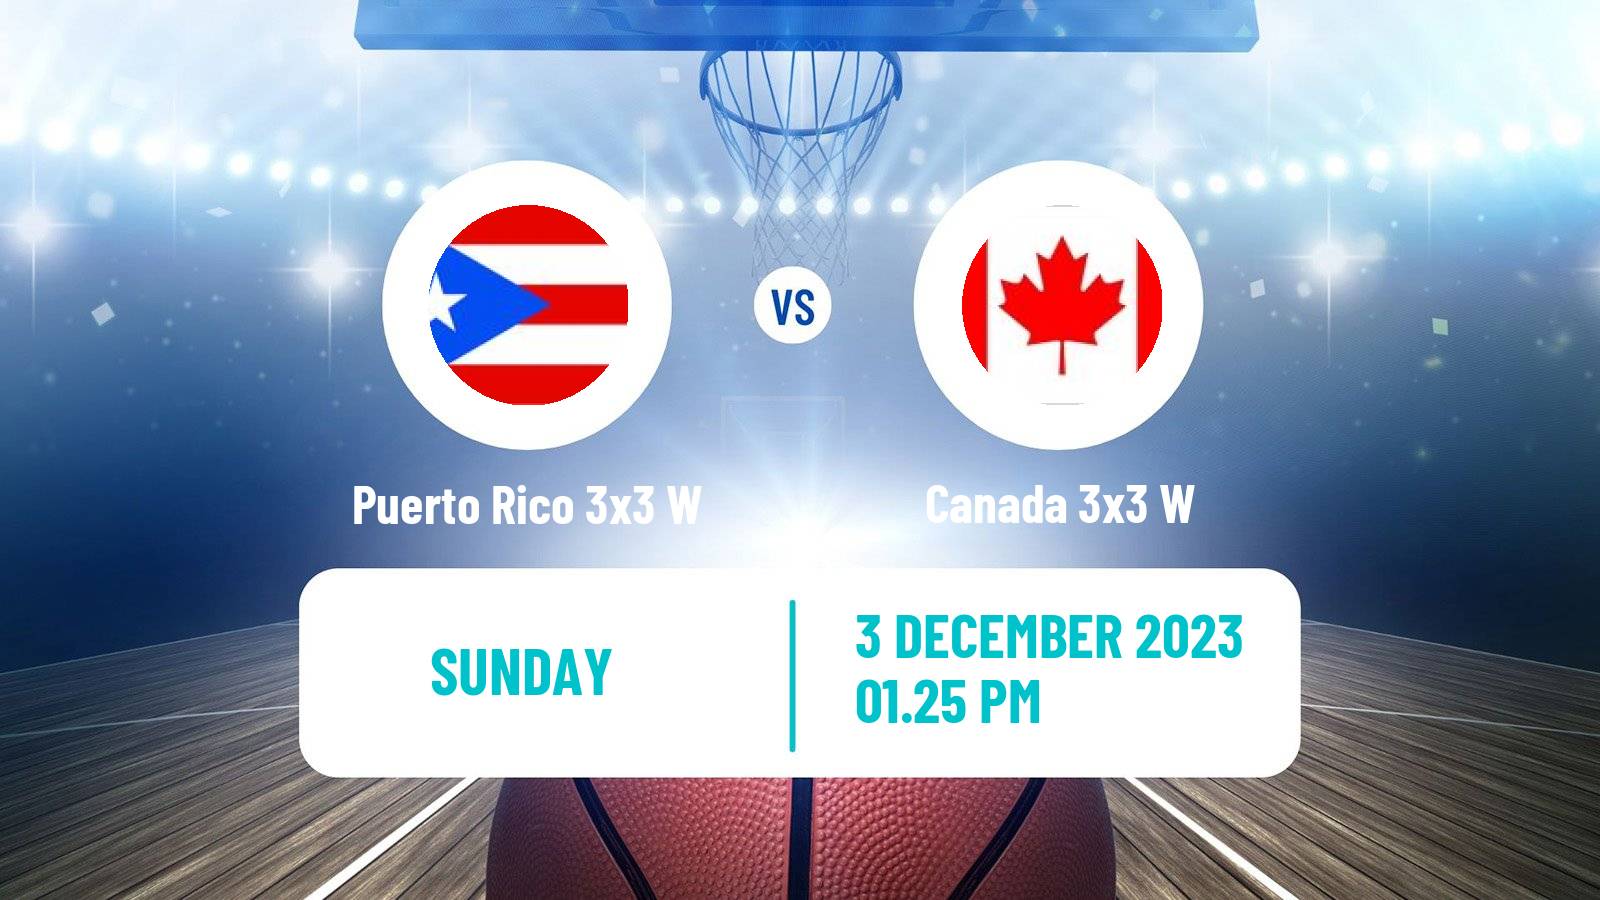 Basketball Americup 3x3 Women Puerto Rico 3x3 W - Canada 3x3 W